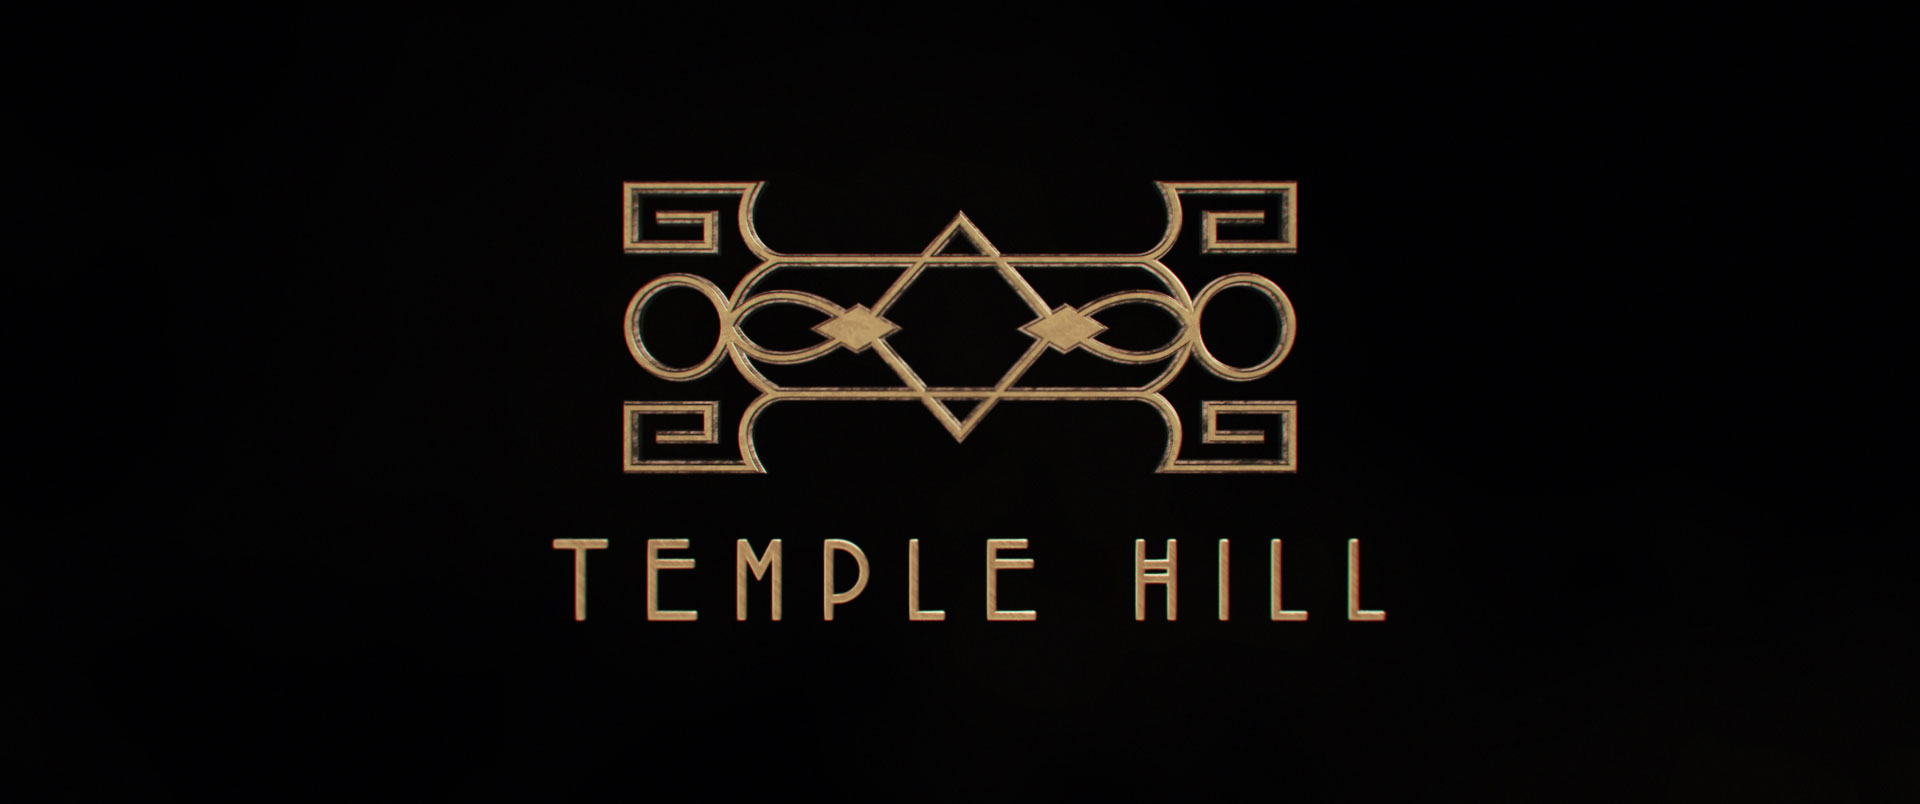 Temple Hill Entertainment logo